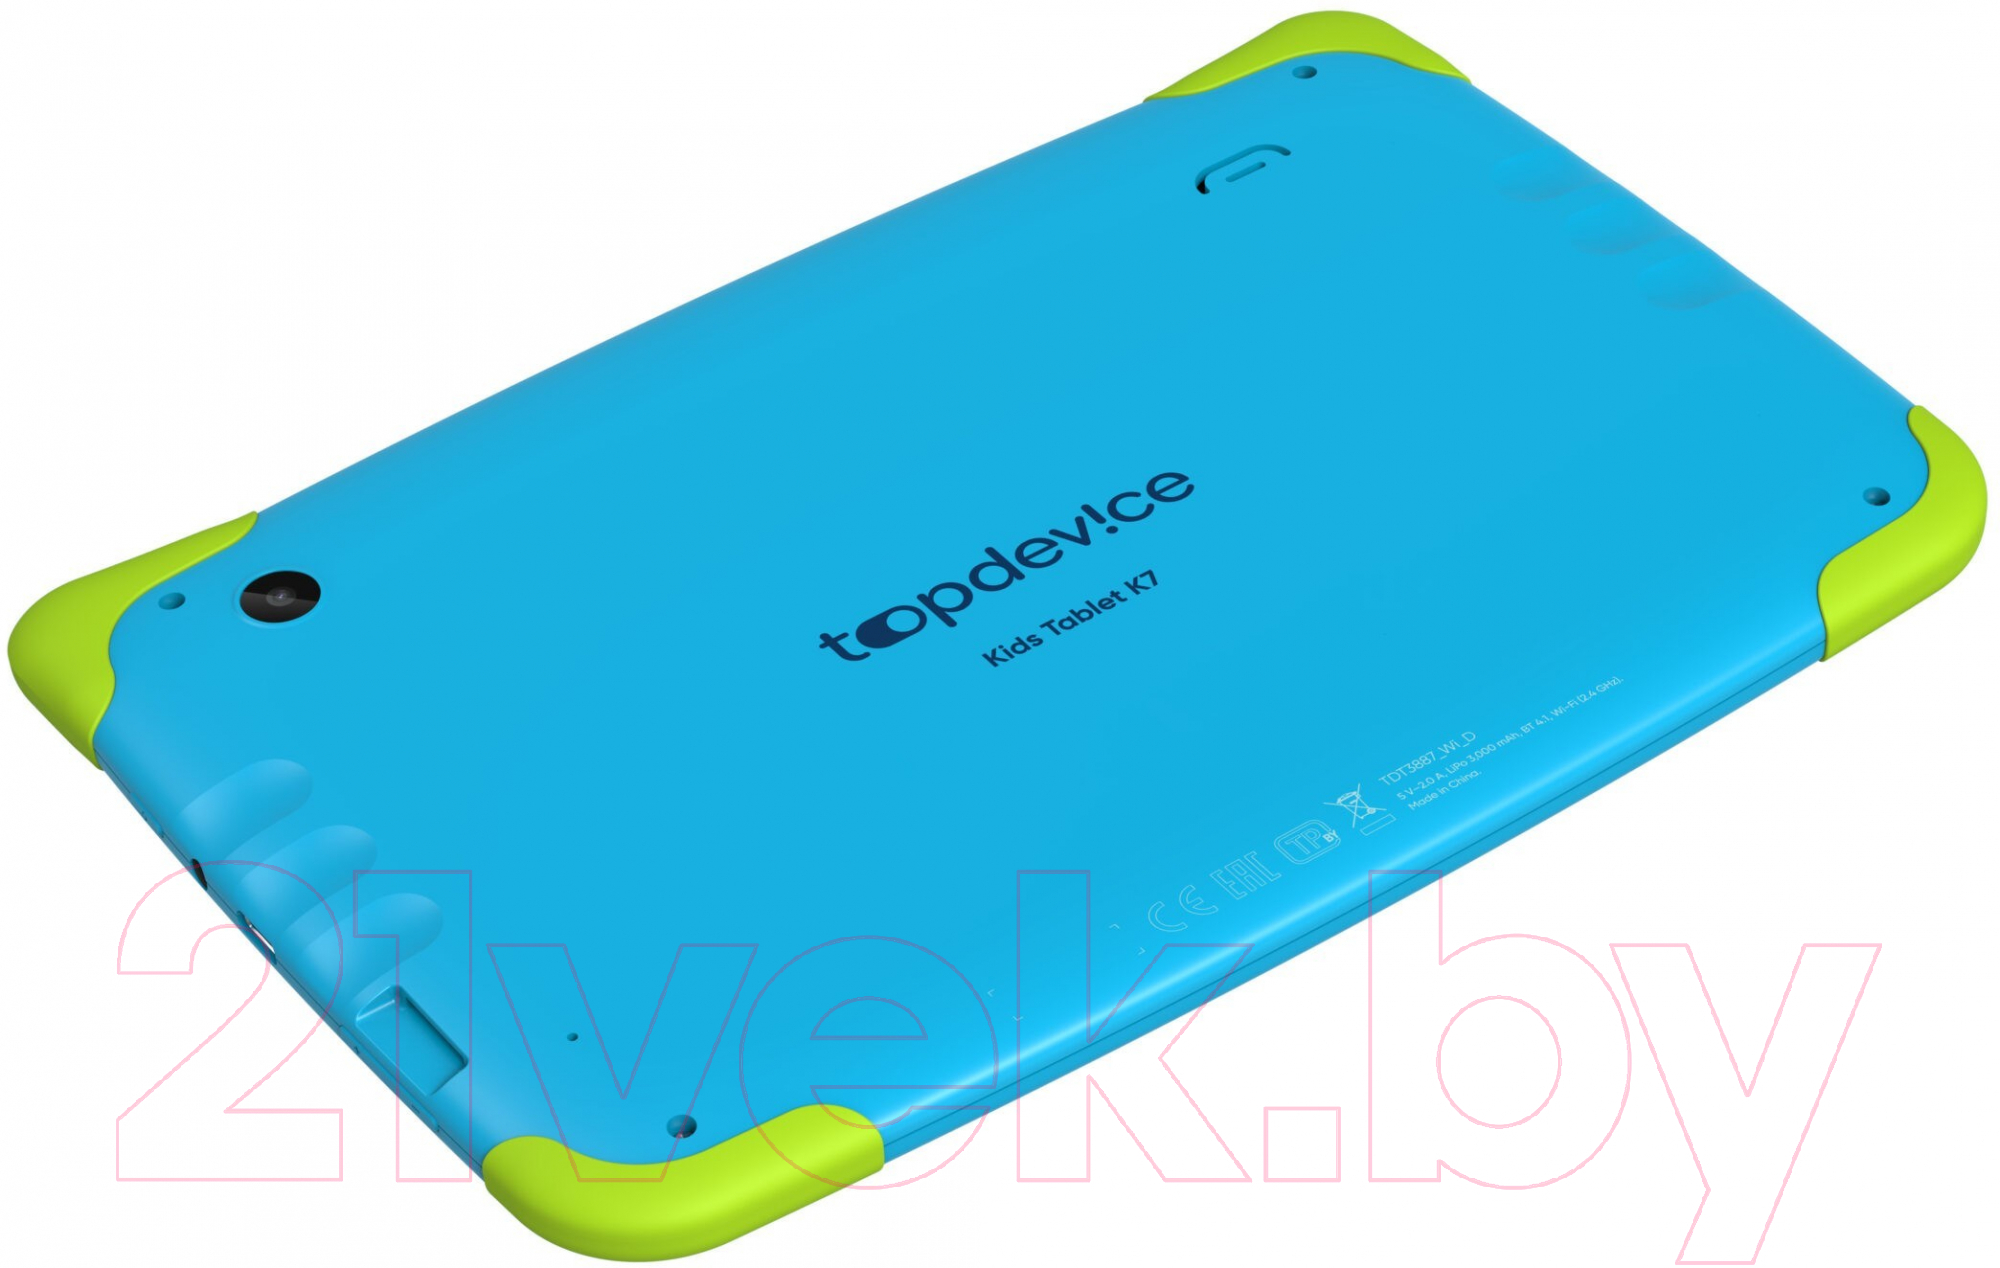 Планшет Topdevice K7 Kids 2GB/32GB WiFi / TDT3887_WI_D_BE